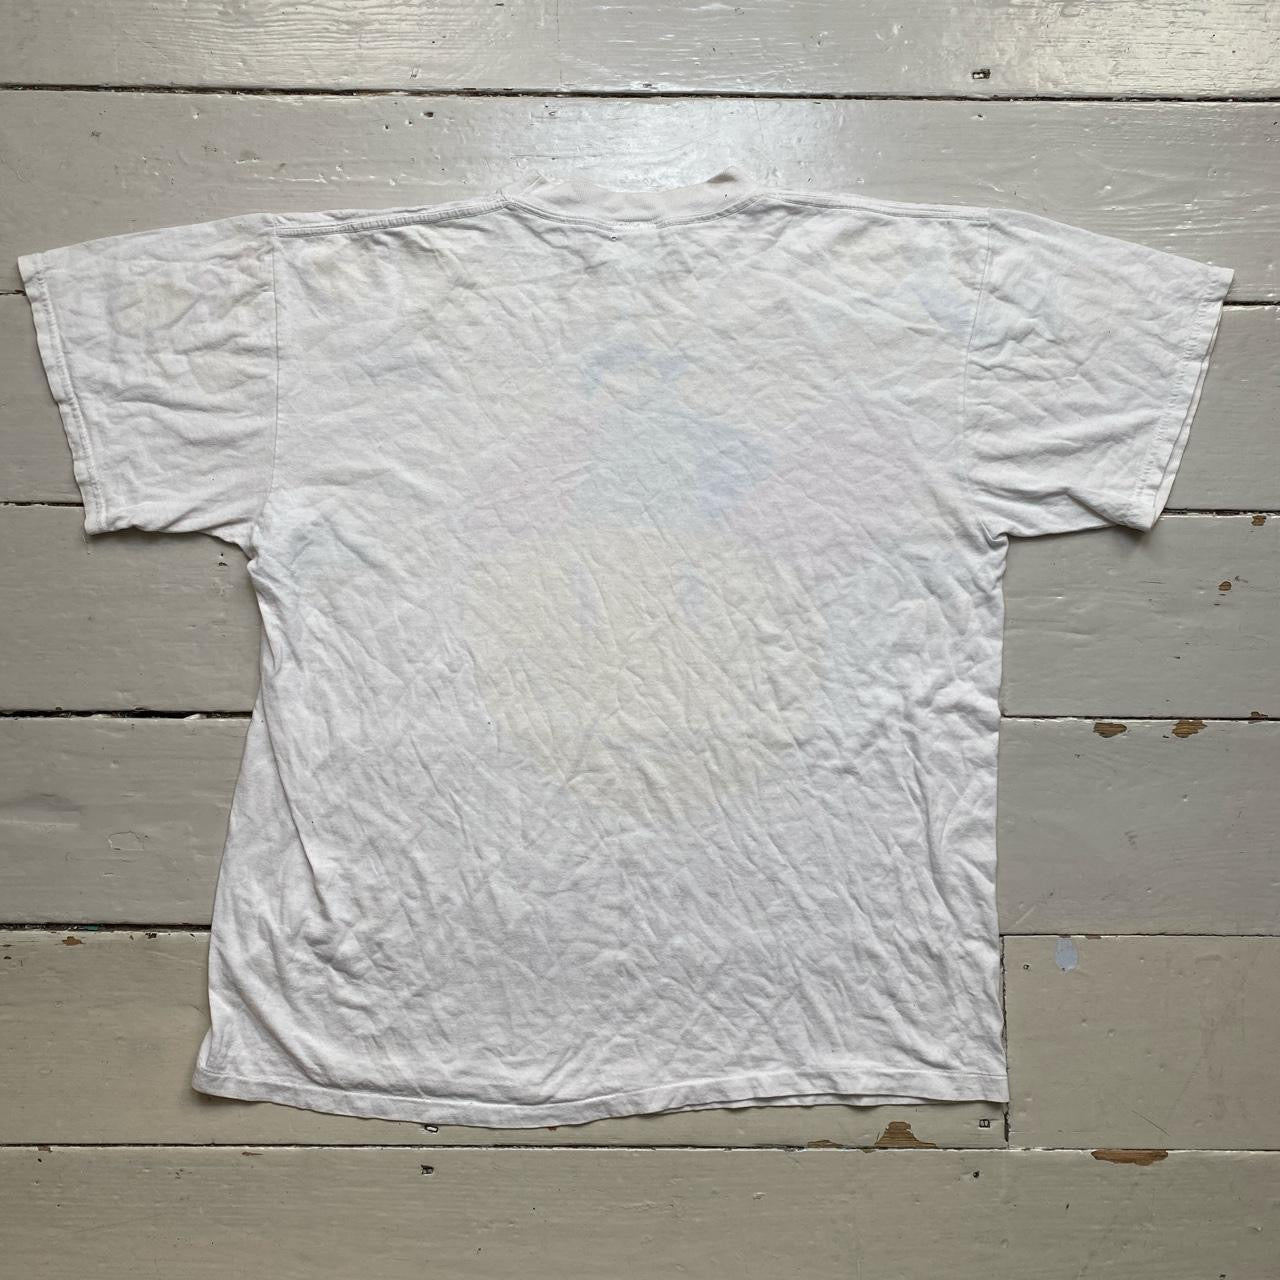 Freeze New York 90s Smile T Shirt (Large)